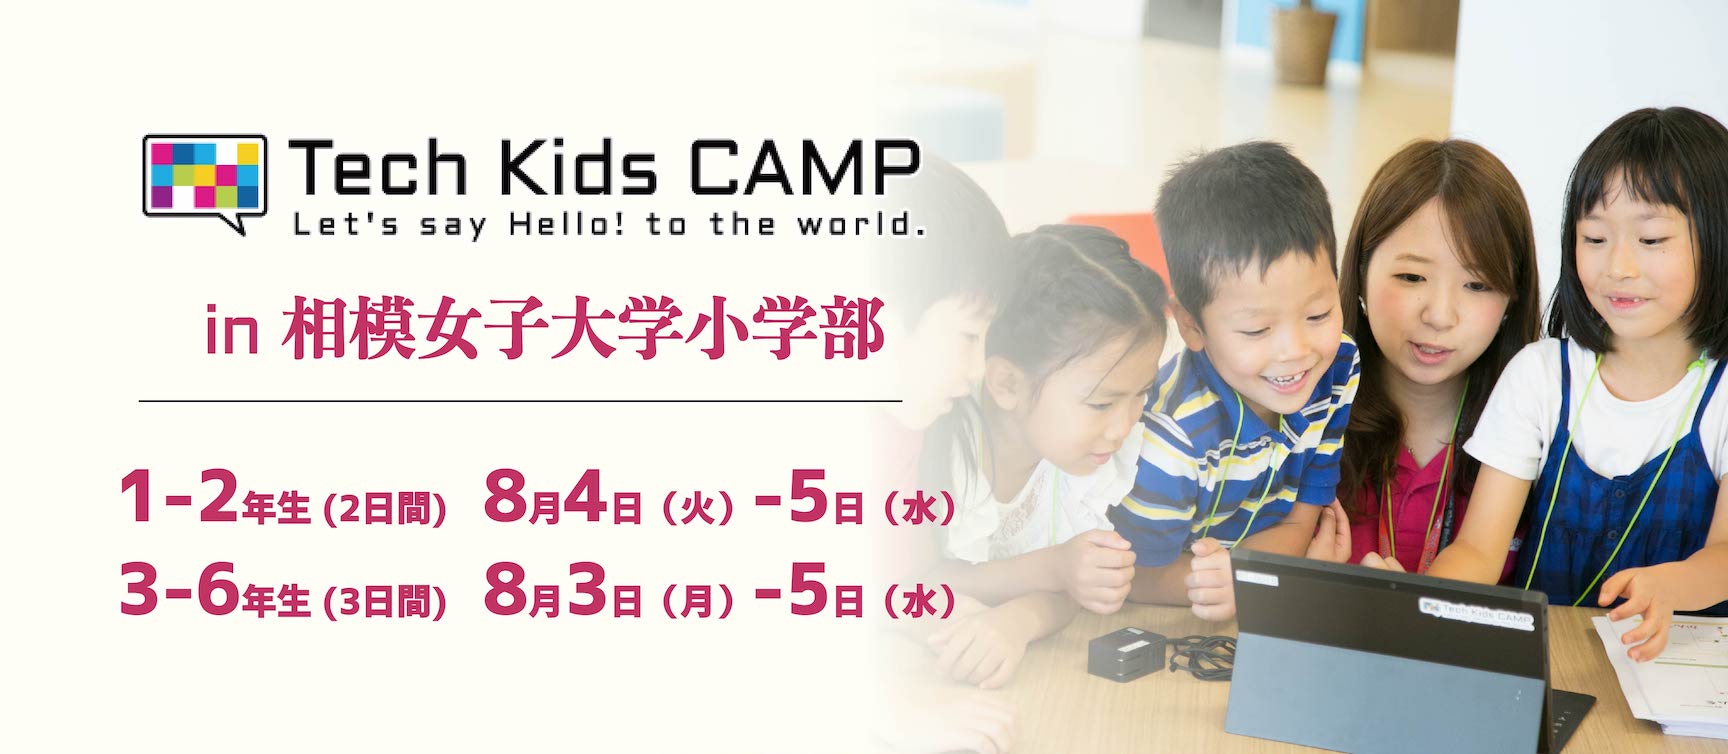 Tech Kids CAMP in 相模女子大学小学部 キービジュアル